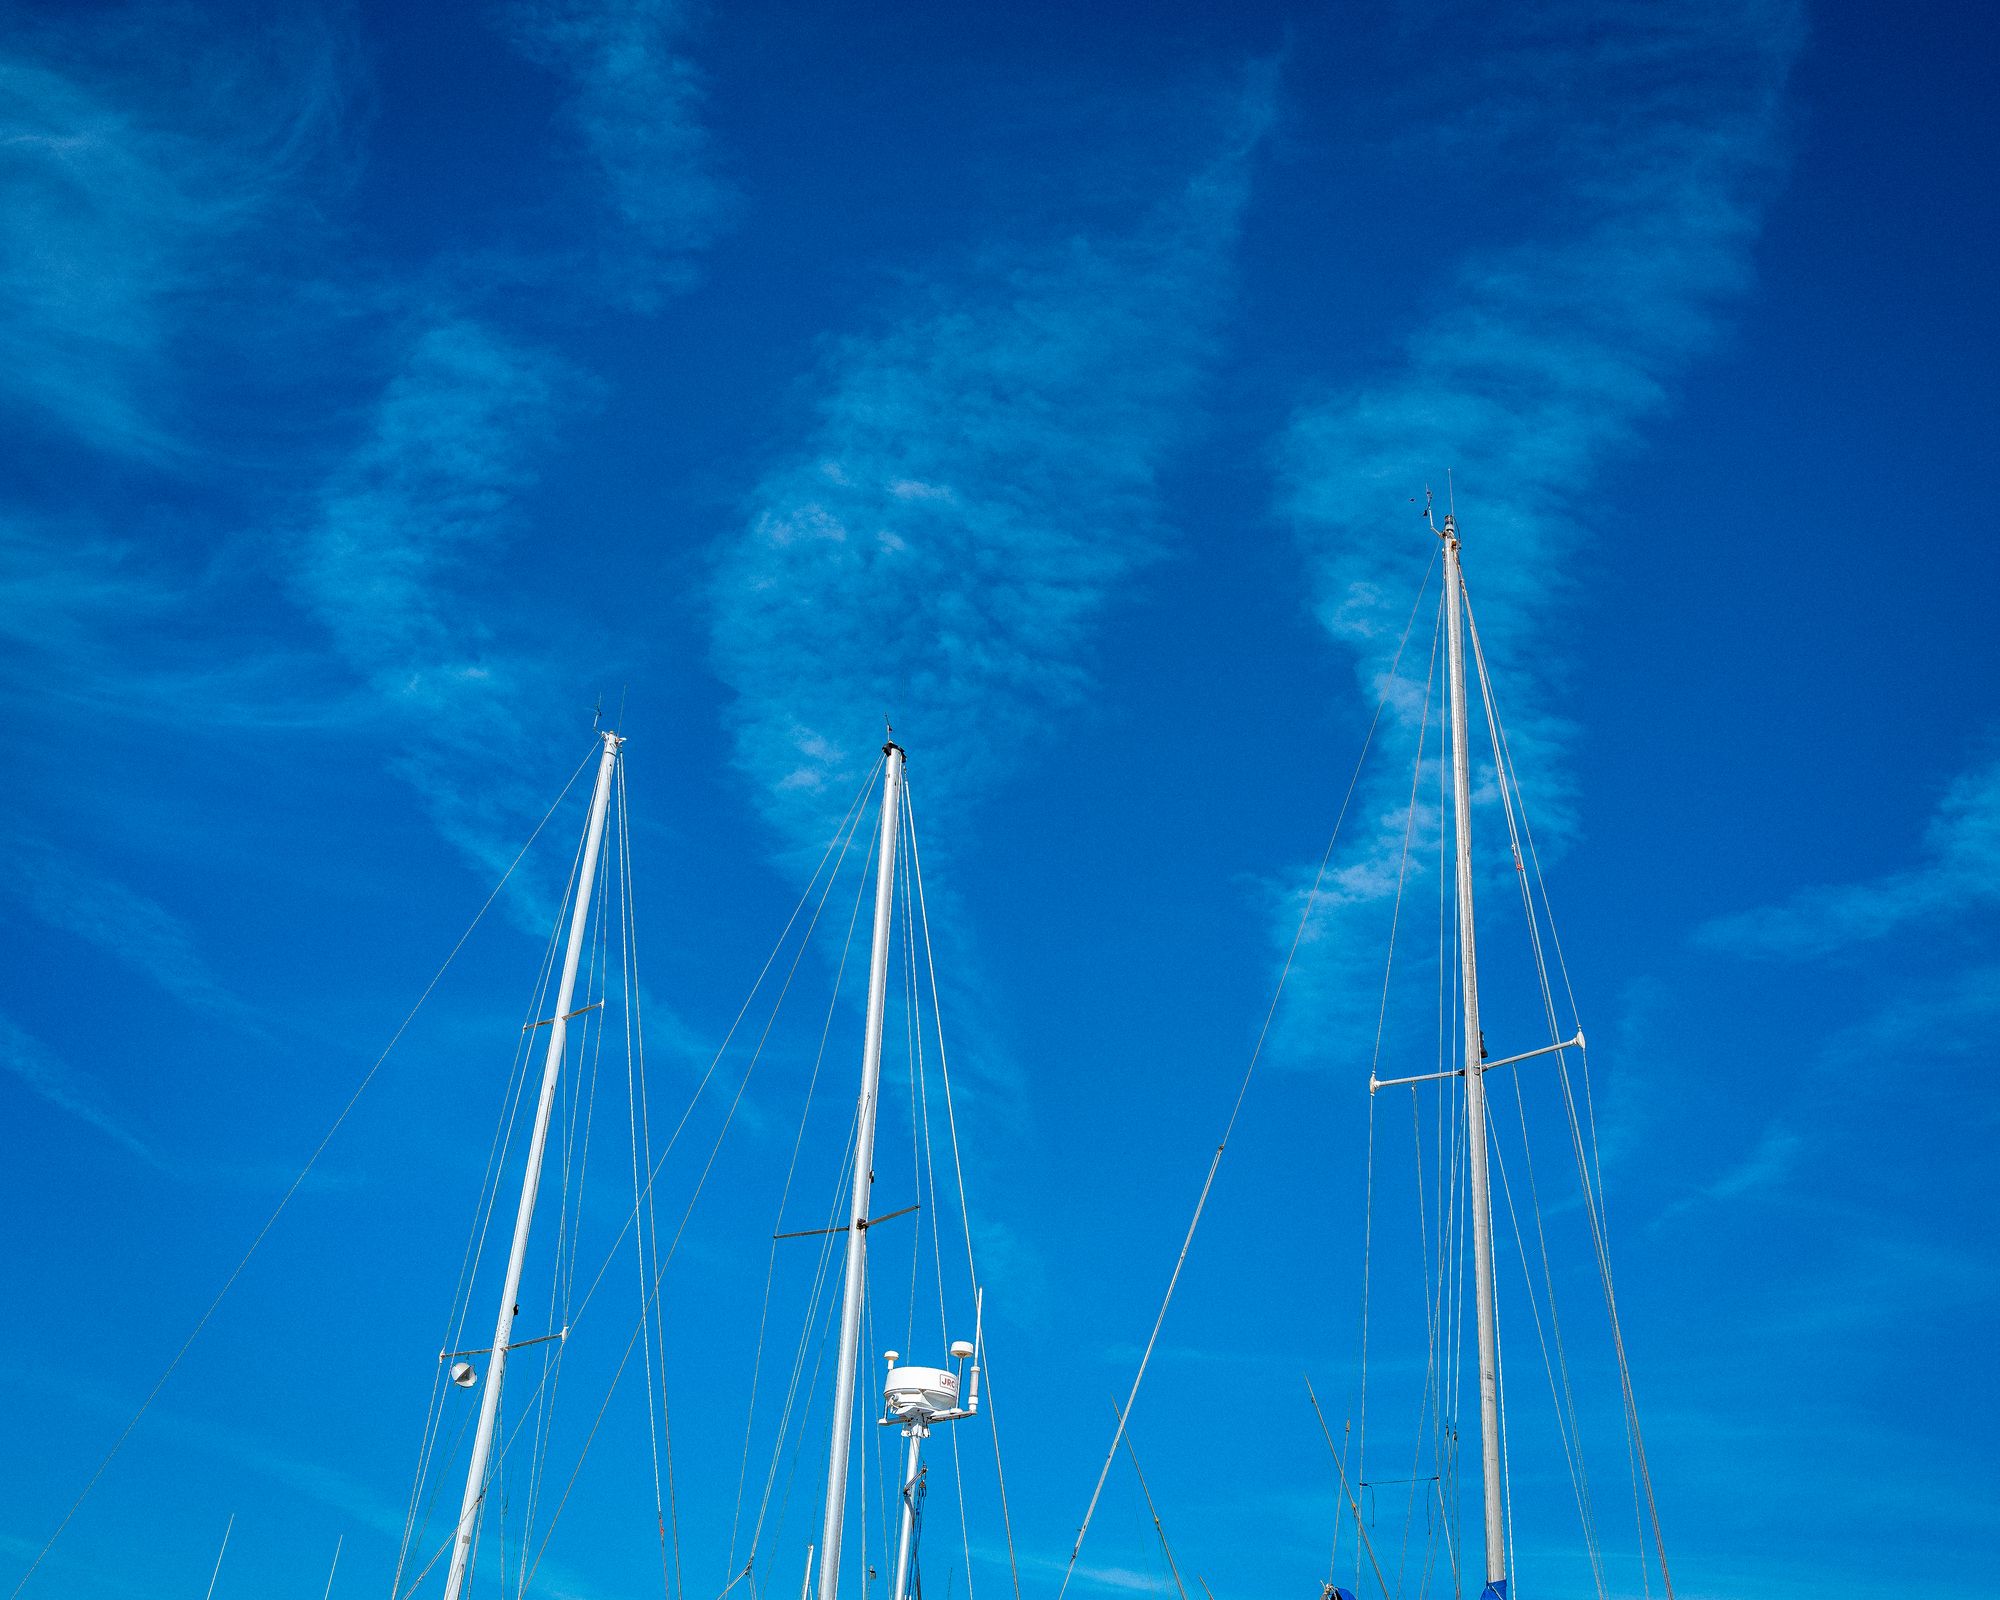 Three sailboat masts with three clouds Sayville Long Island New York